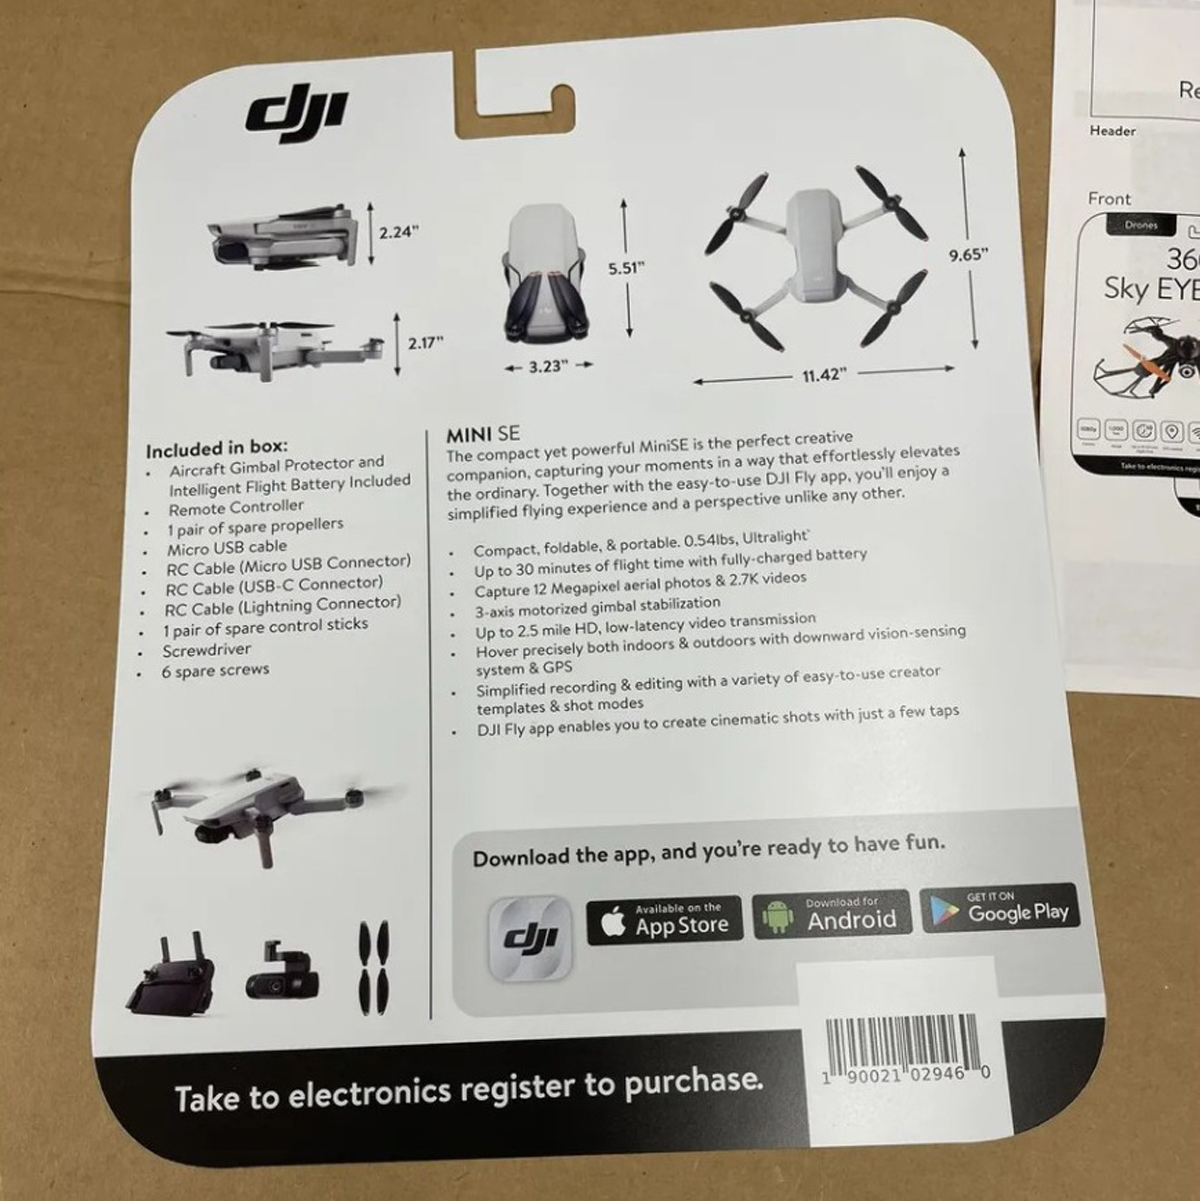 DJI Mini SE Mavic Walmart price aerial drone